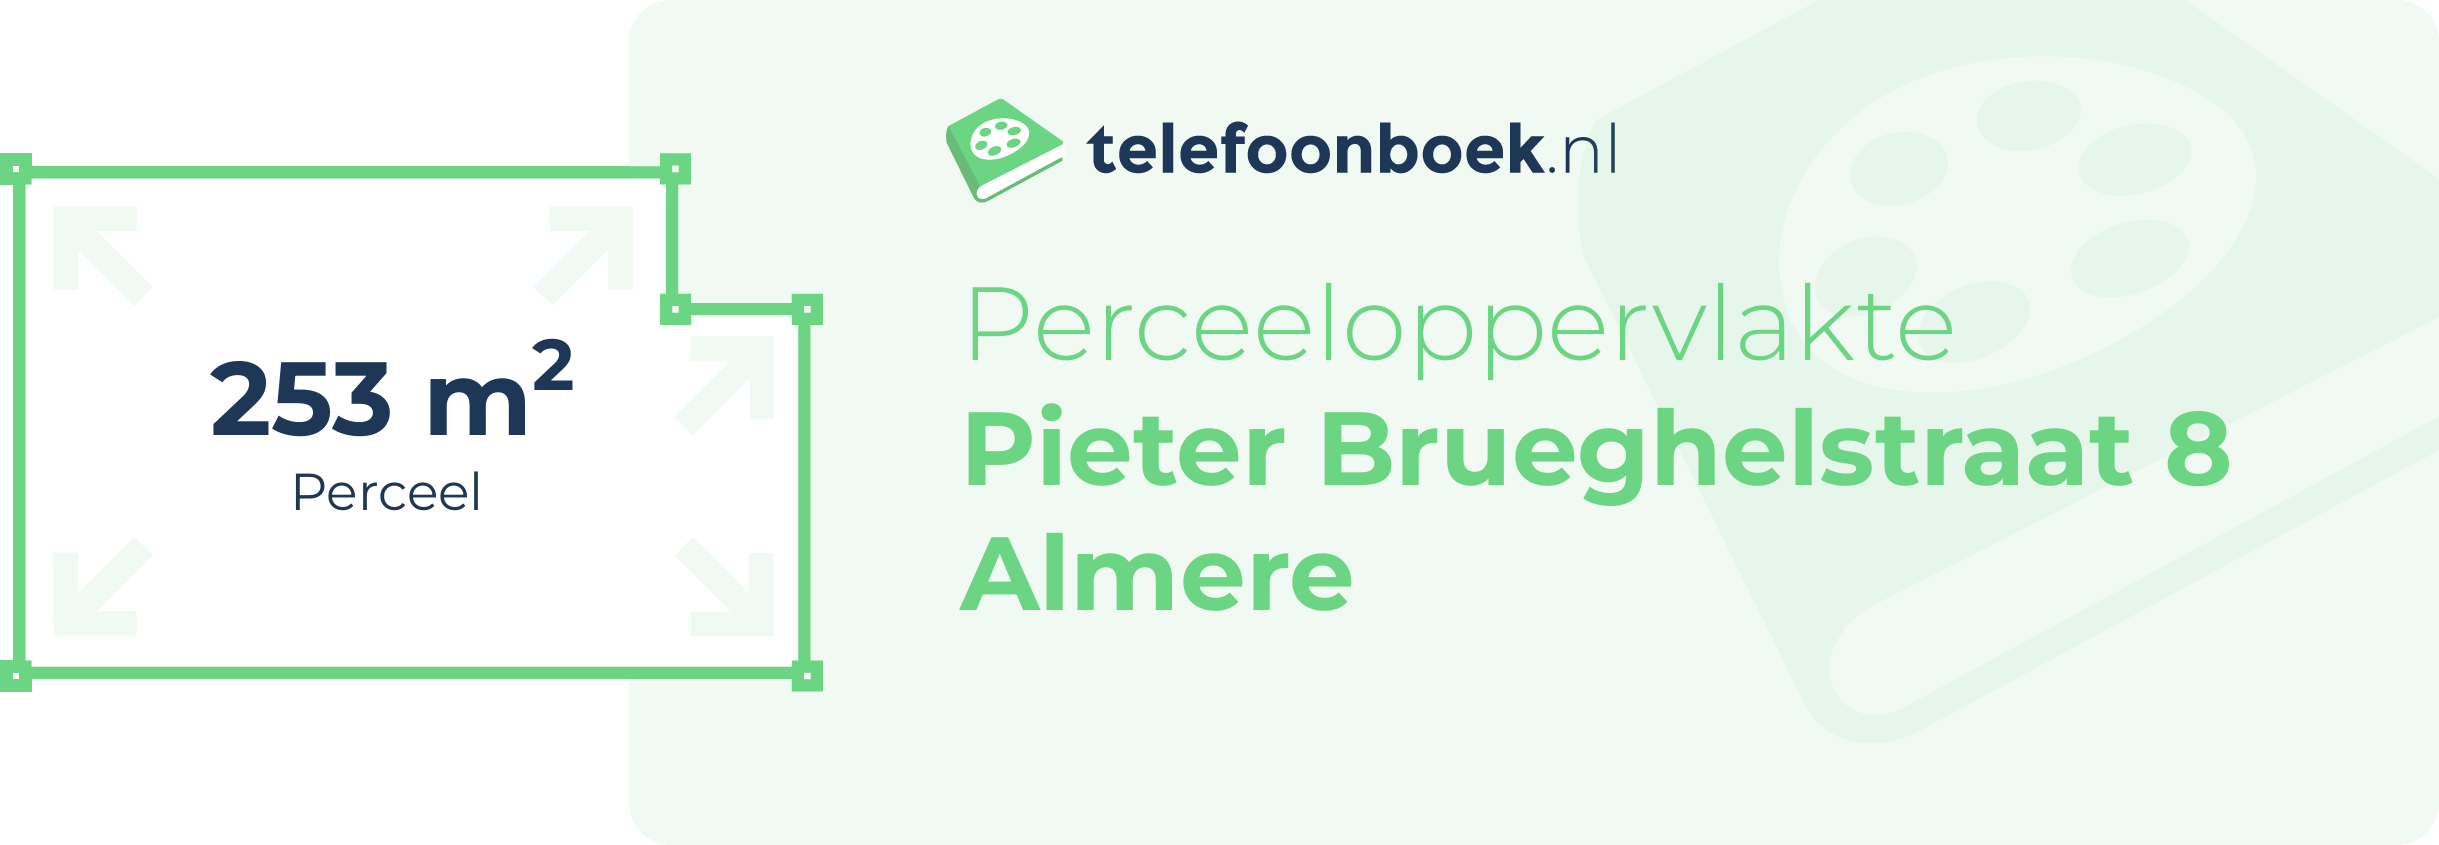 Perceeloppervlakte Pieter Brueghelstraat 8 Almere